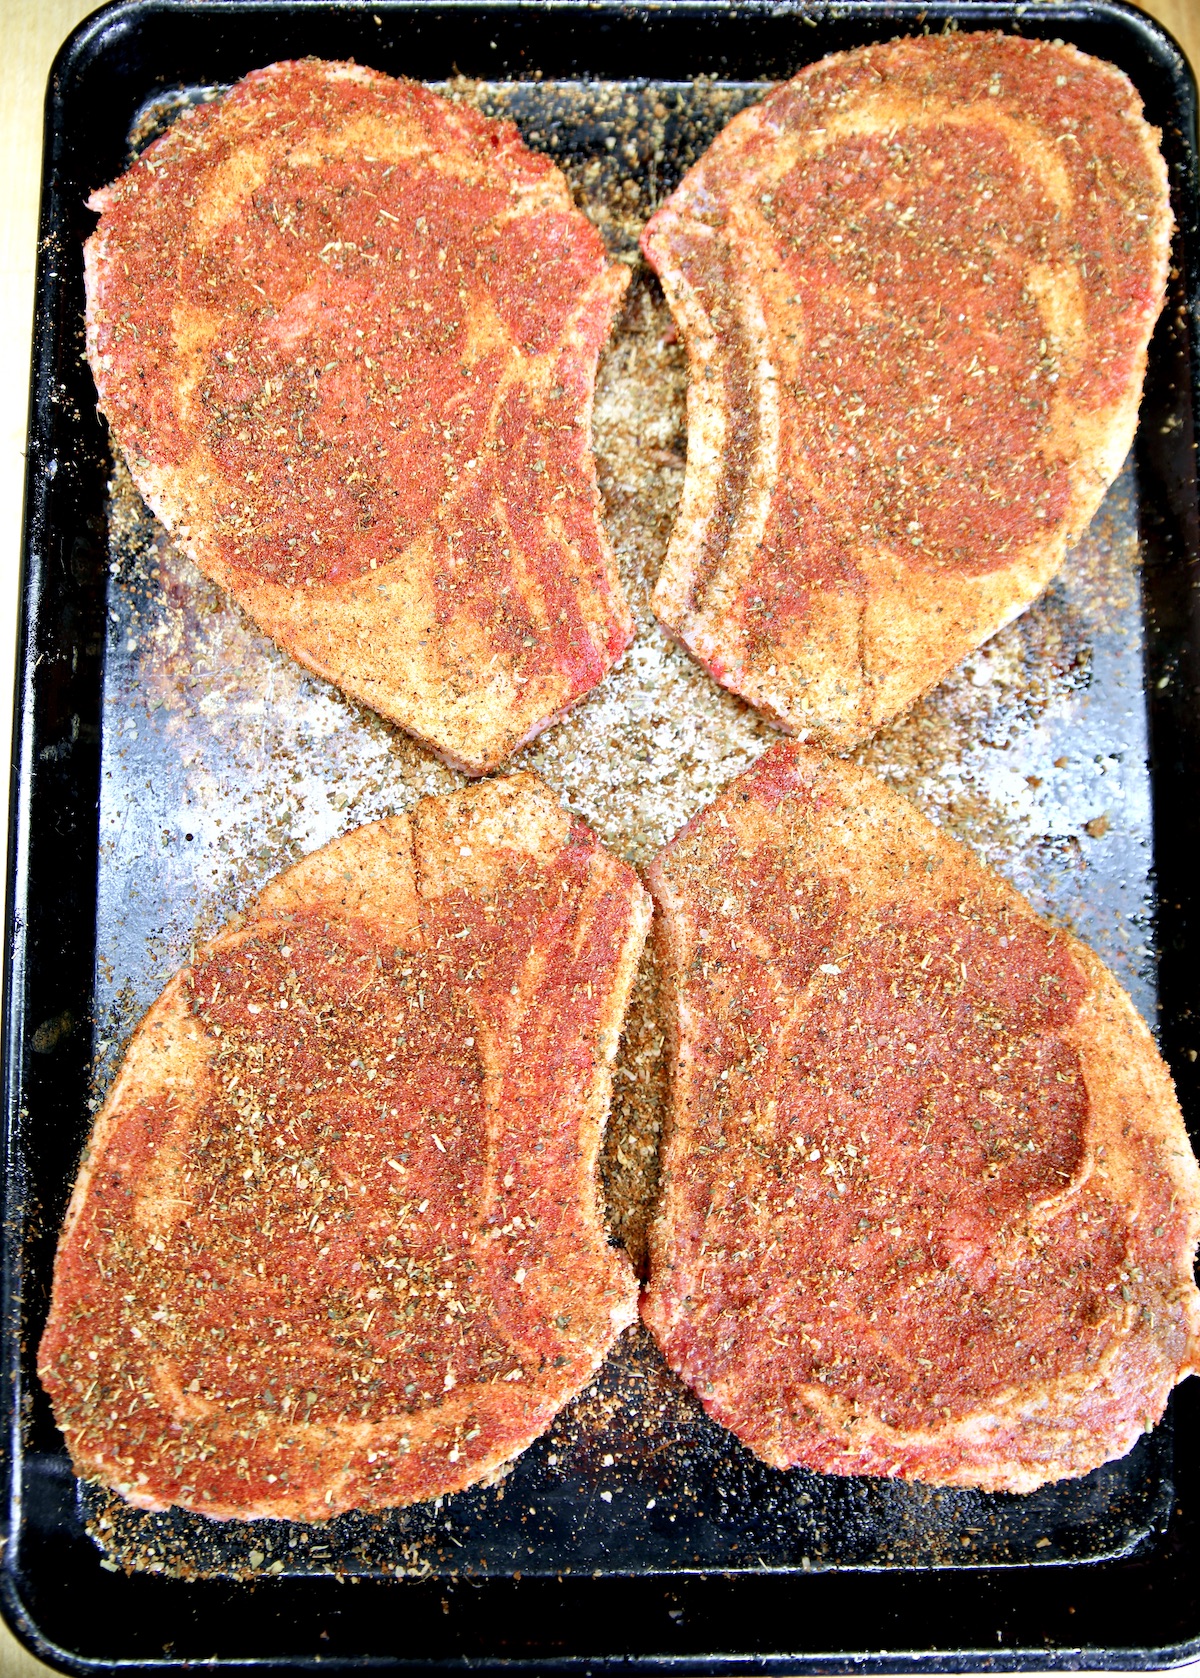 4 bone-in ribeye steaks on a sheet pan seasoned with dry rub.